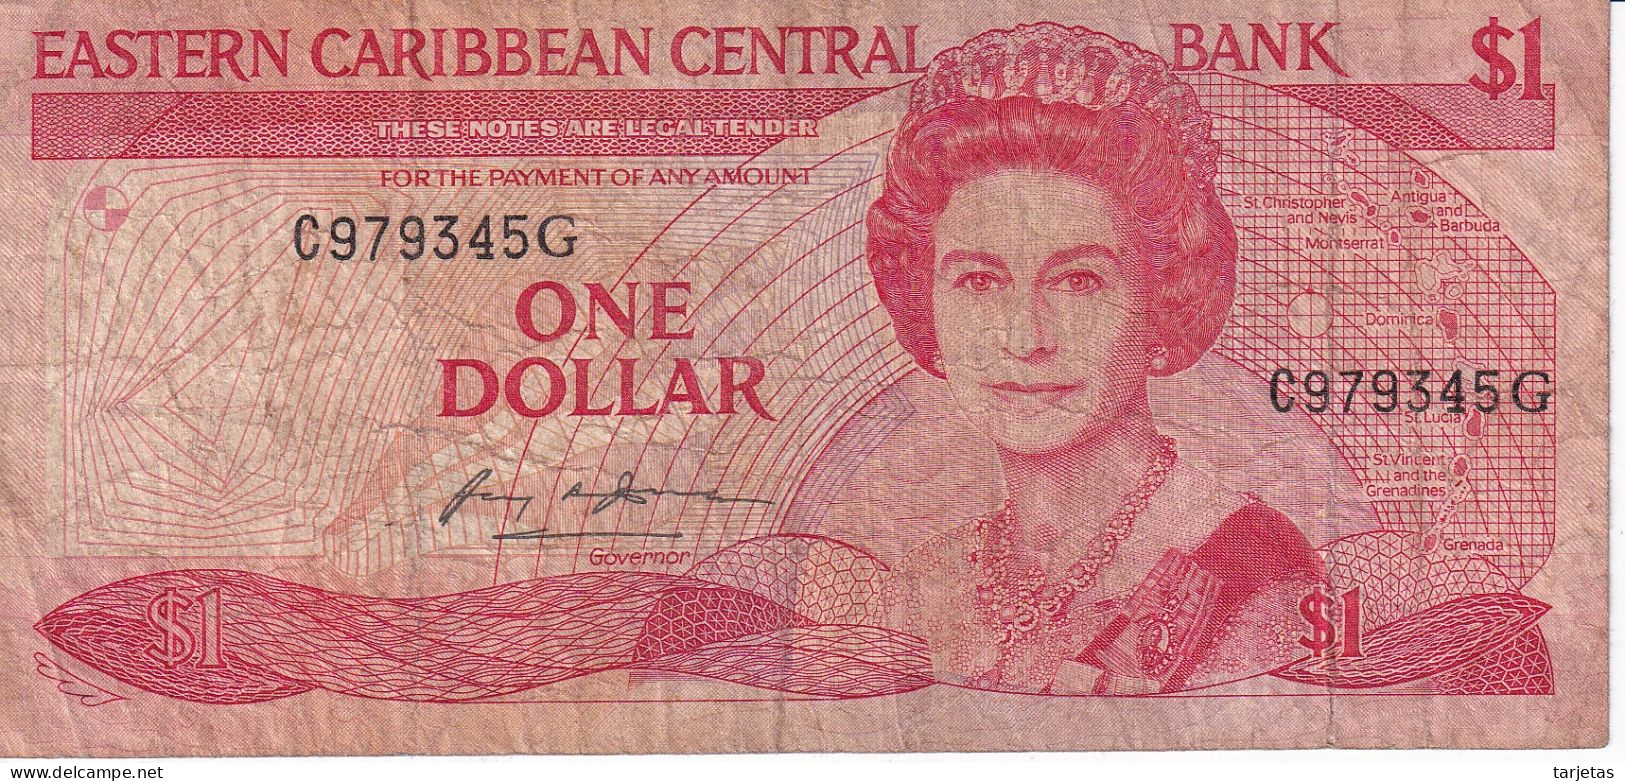 BILLETE DE EASTERN CARIBBEAN CENTRAL DE 1 DOLLAR DEL AÑO 1985 (BANKNOTE) - East Carribeans